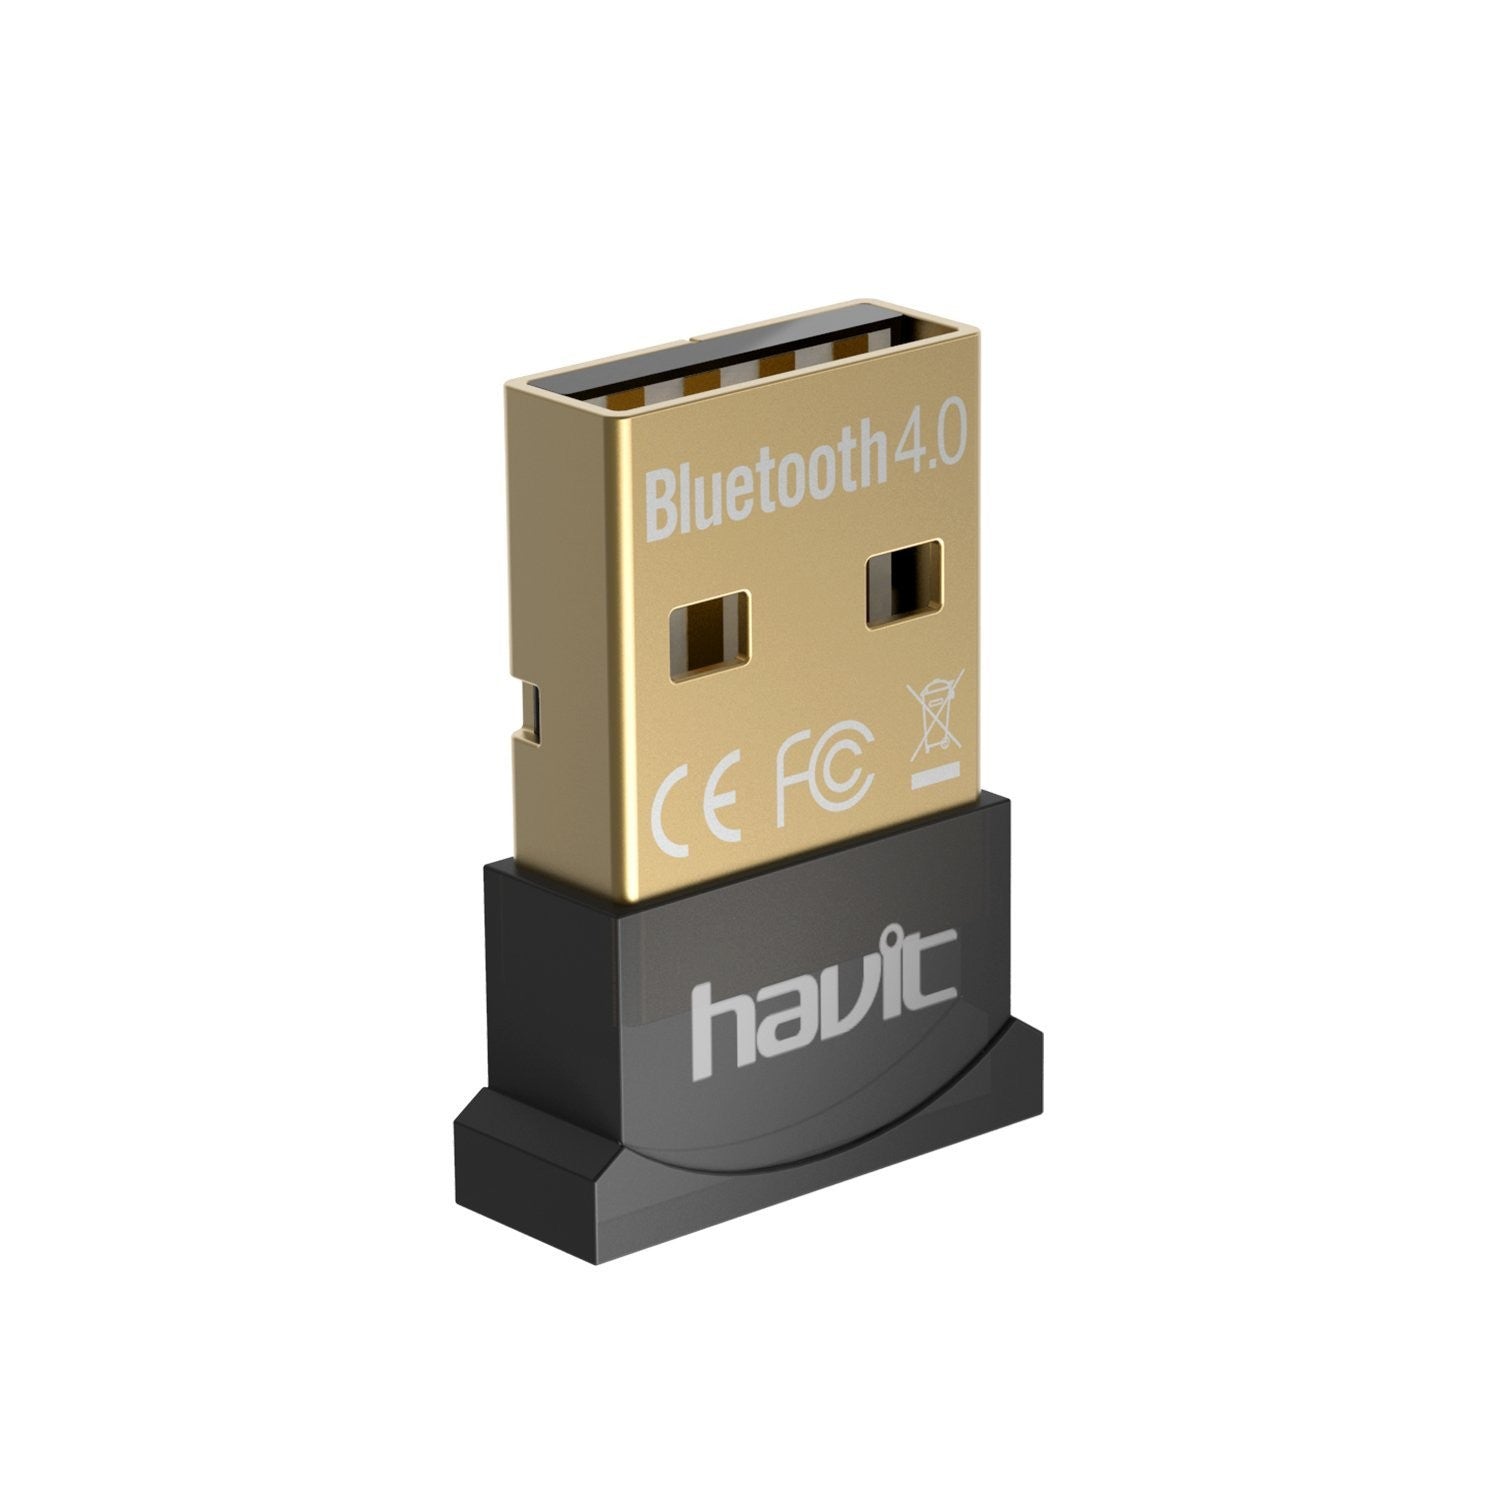 HAVIT HV-888 Bluetooth-Adapter/Dongle für Windows-Computer